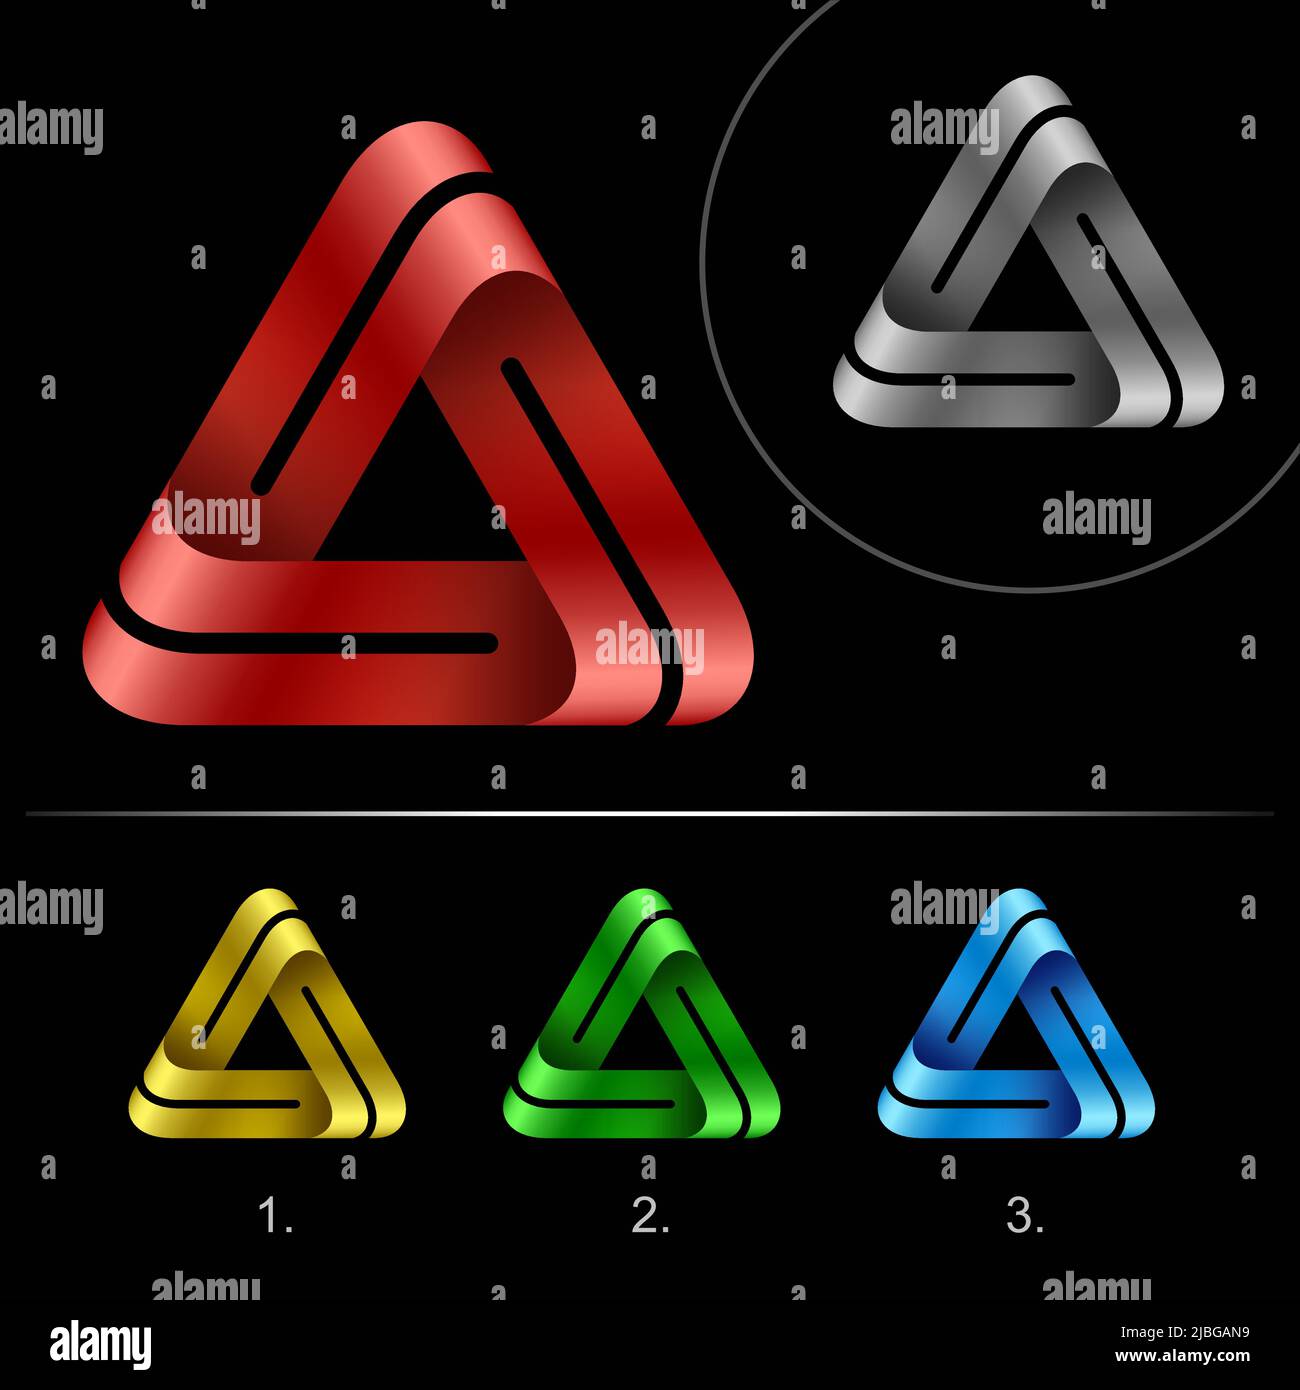 Res logo design -Fotos und -Bildmaterial in hoher Auflösung – Alamy